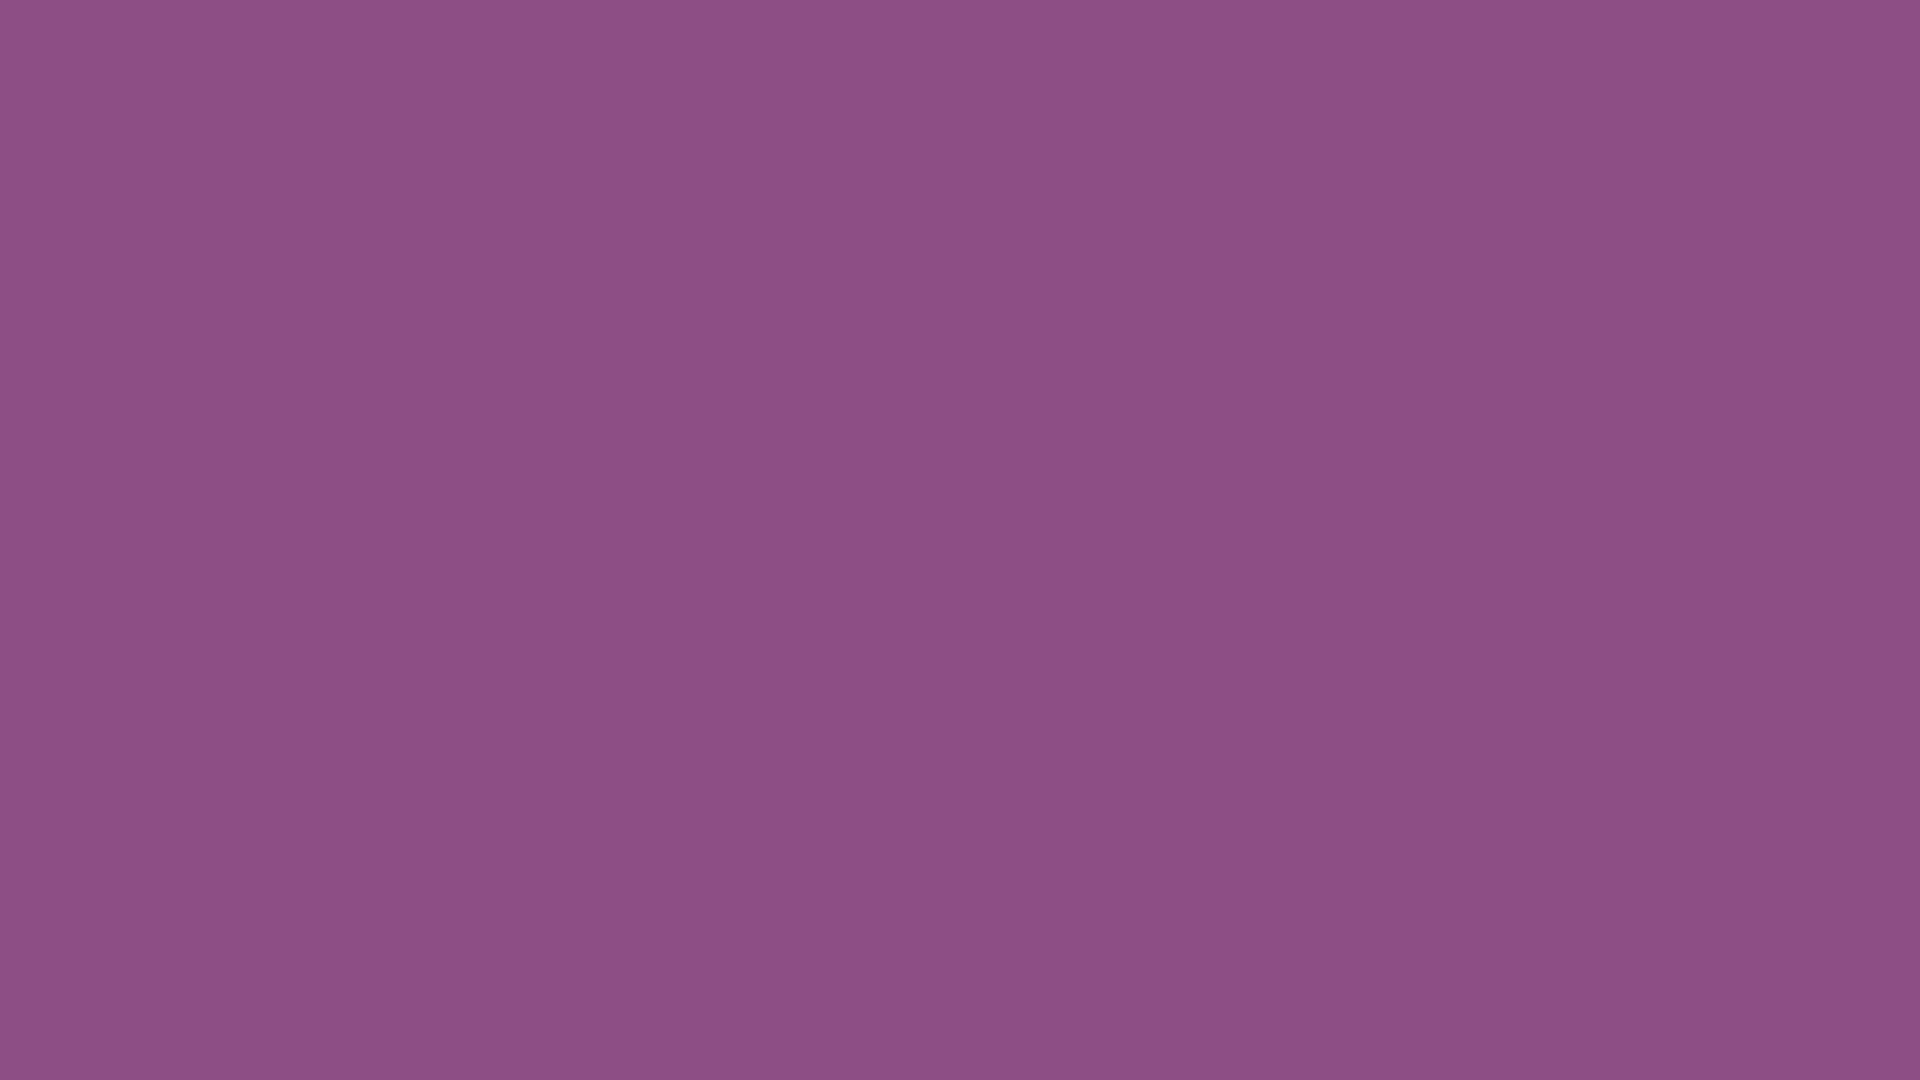 1920x1080 Razzmic Berry Solid Color Background